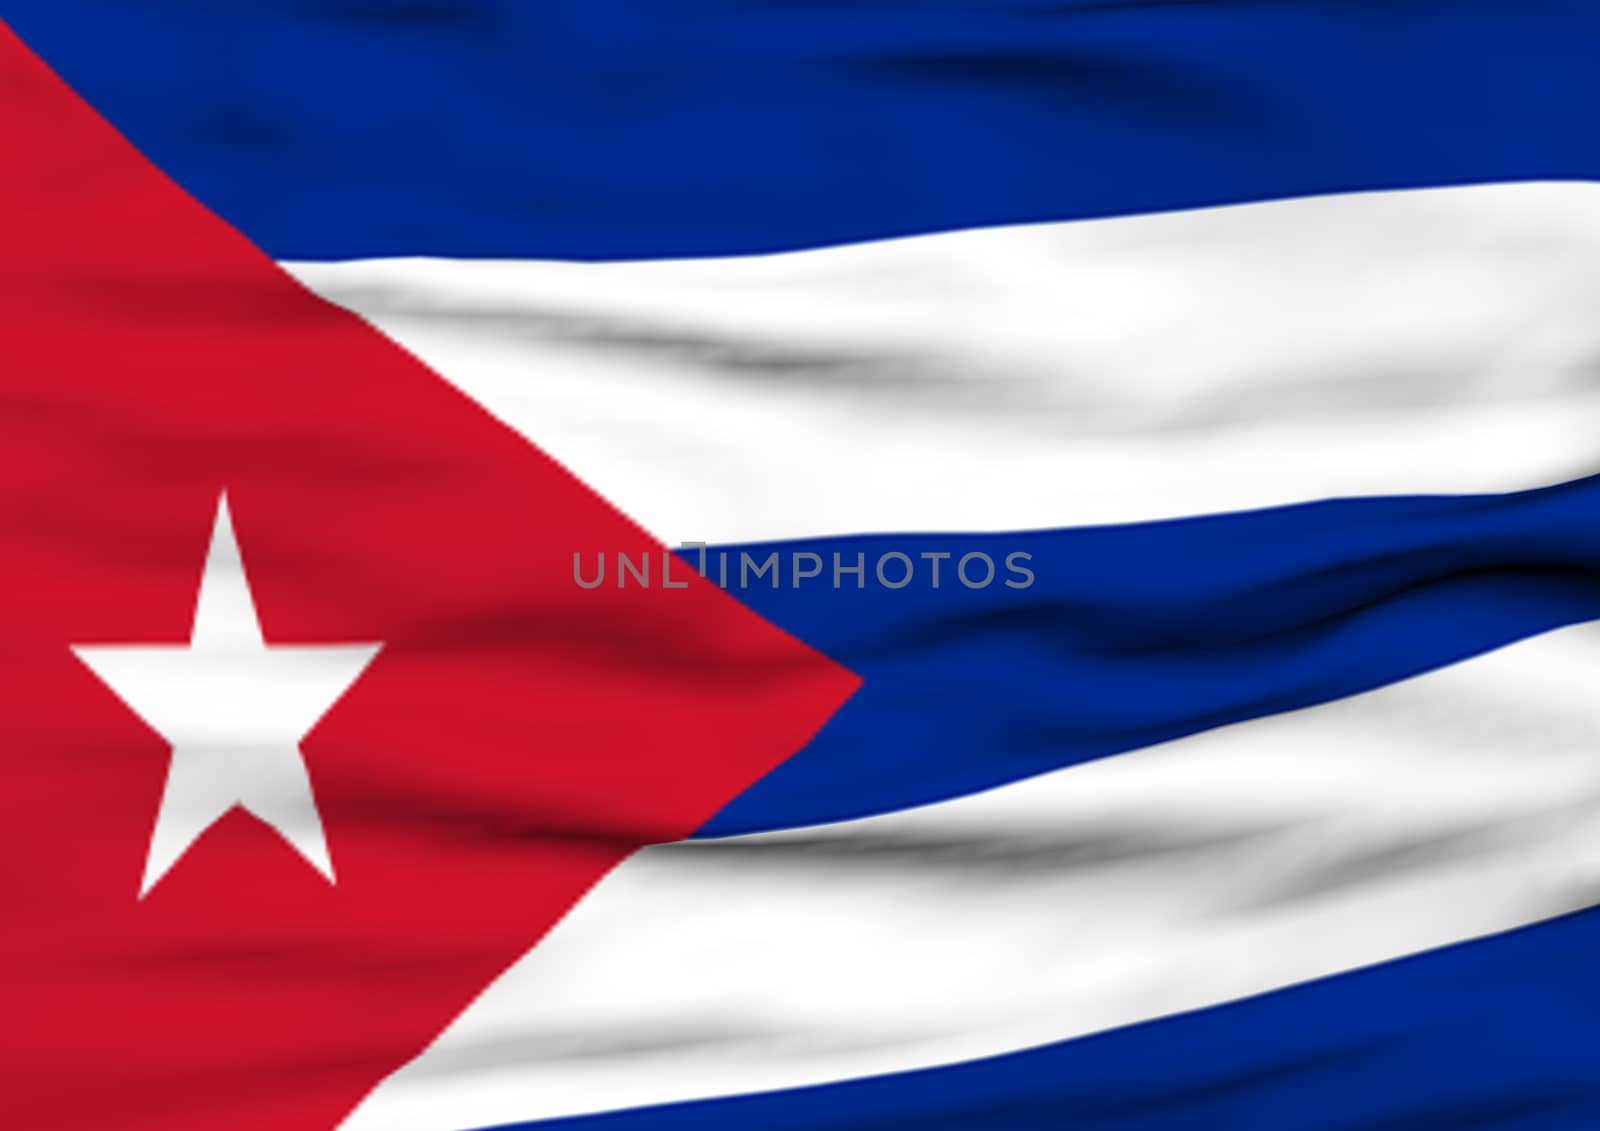 Image of a waving flag of Cuba